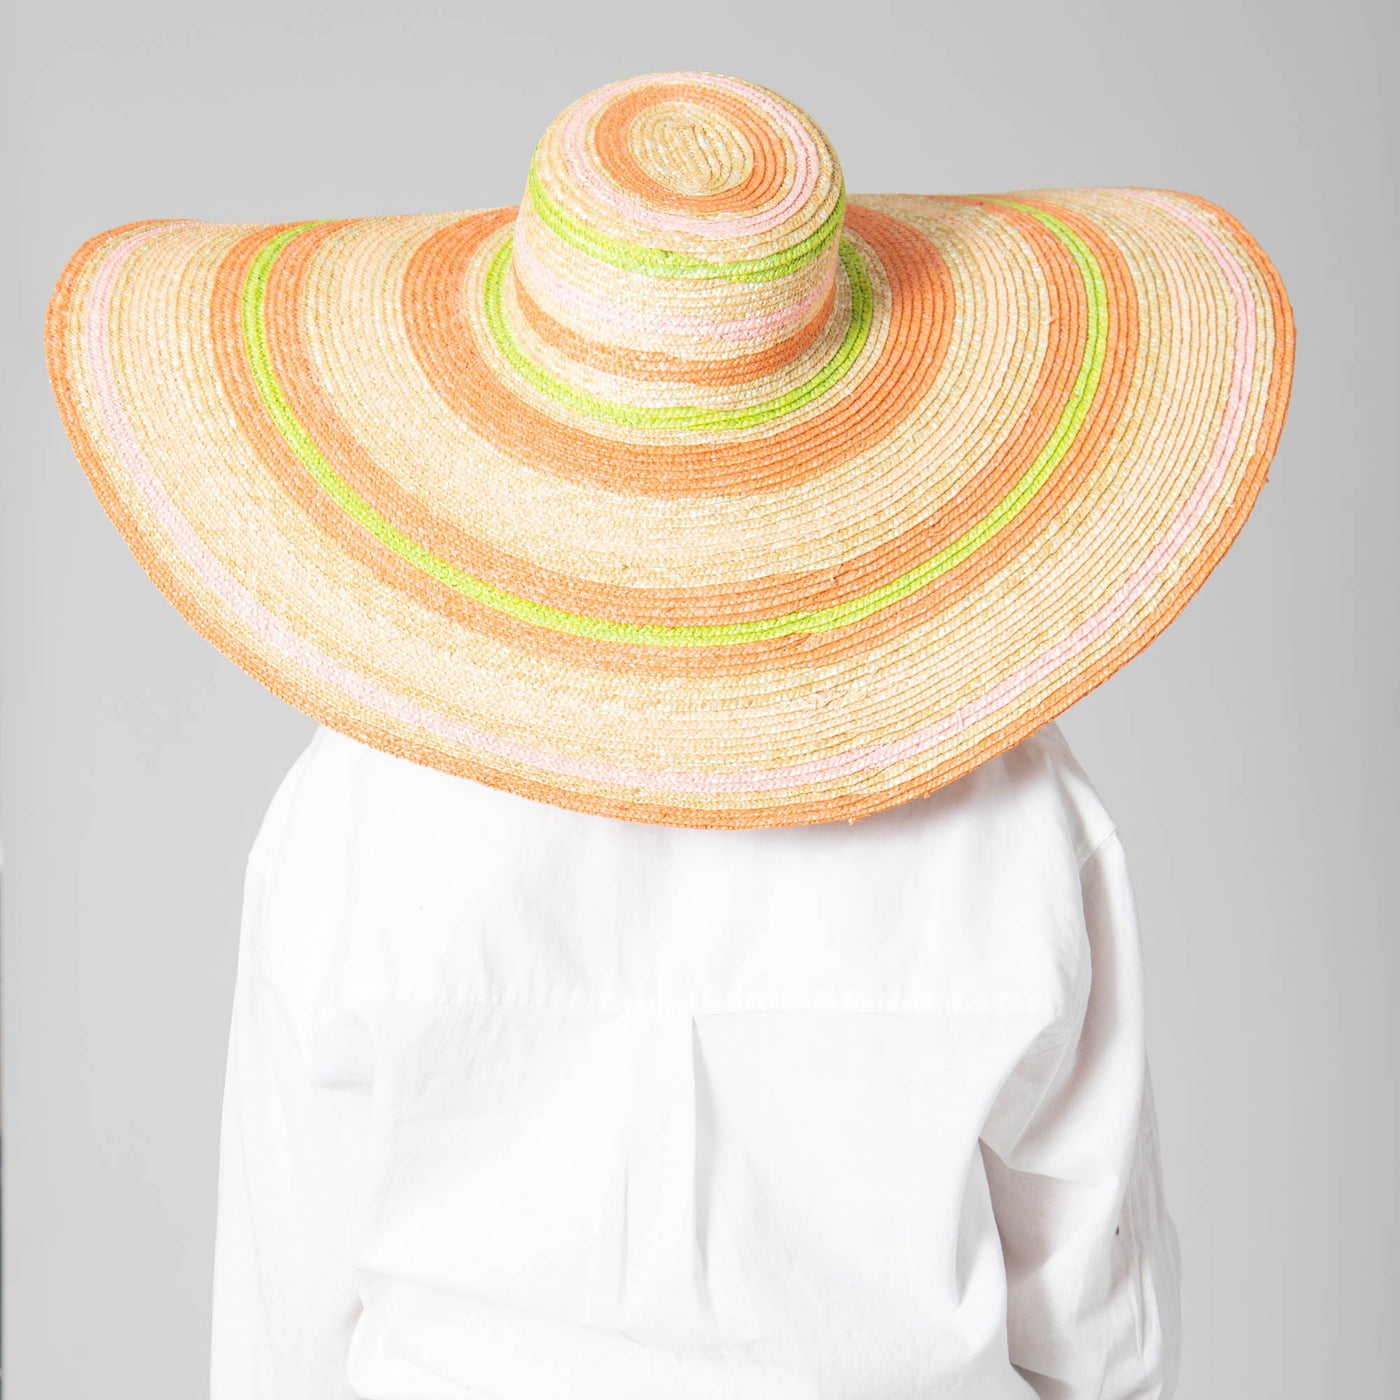 SUN BRIM - On Multi Holiday - Wheat Straw Stripe Wide Brim Sun Hat